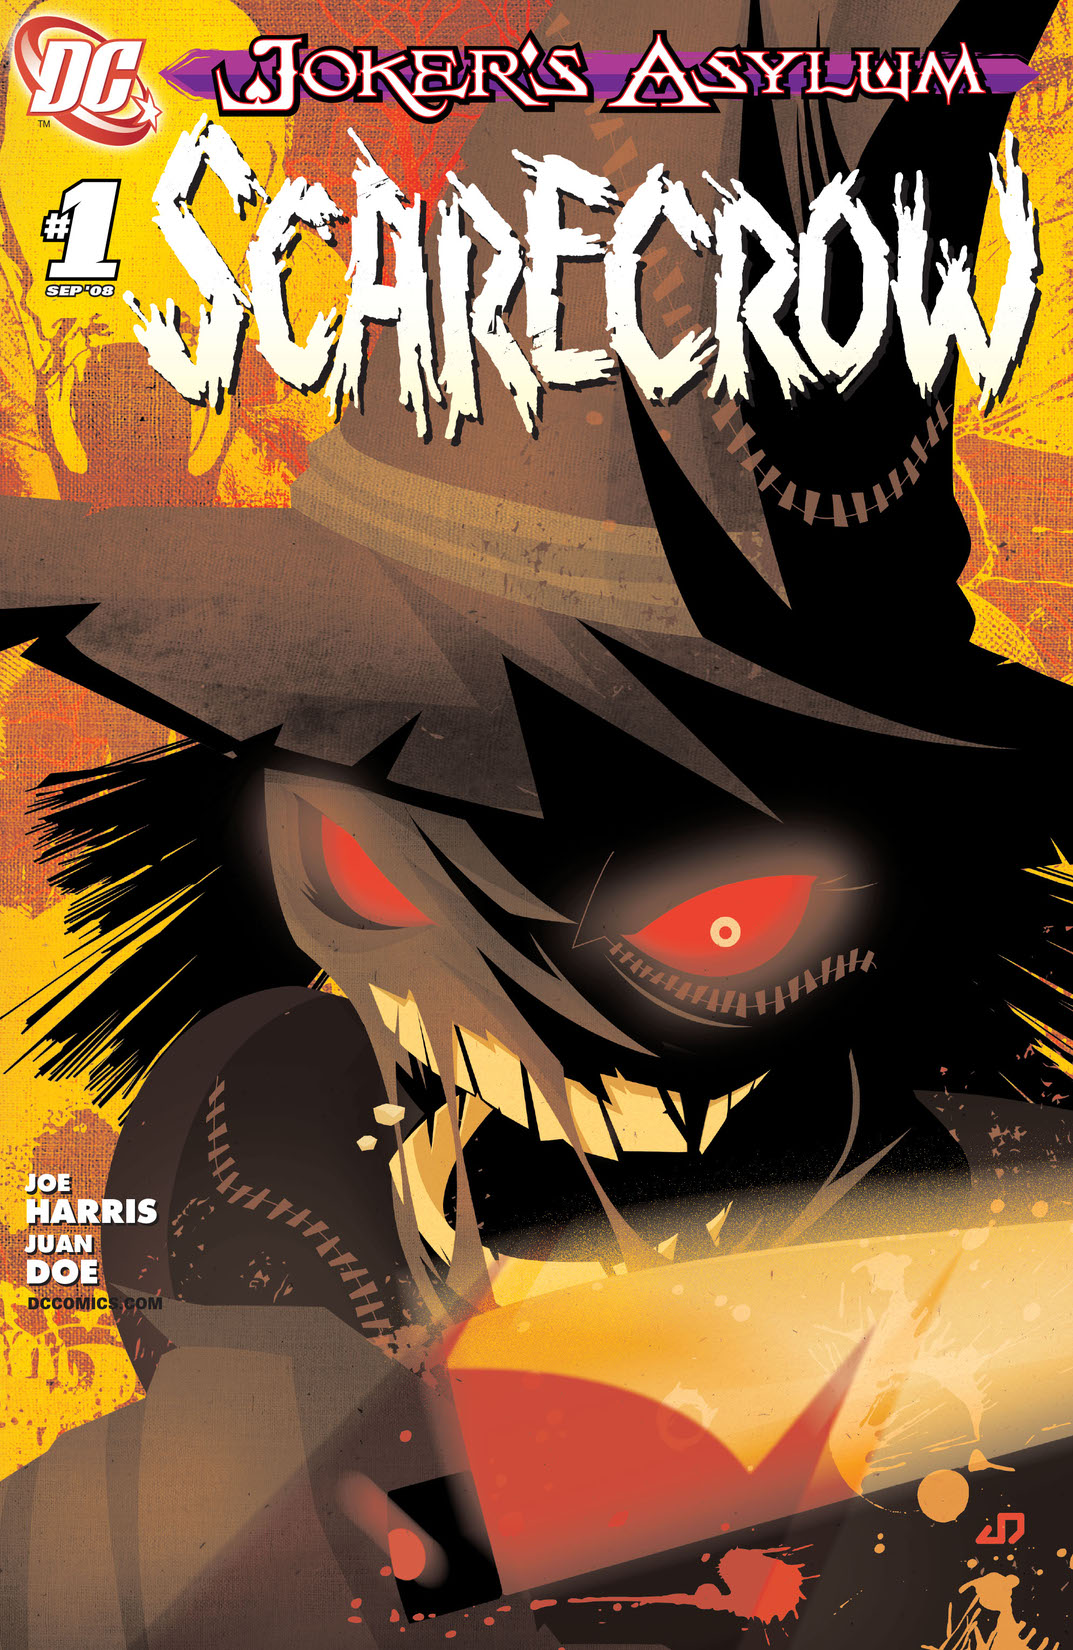 Joker's Asylum: Scarecrow #1 preview images